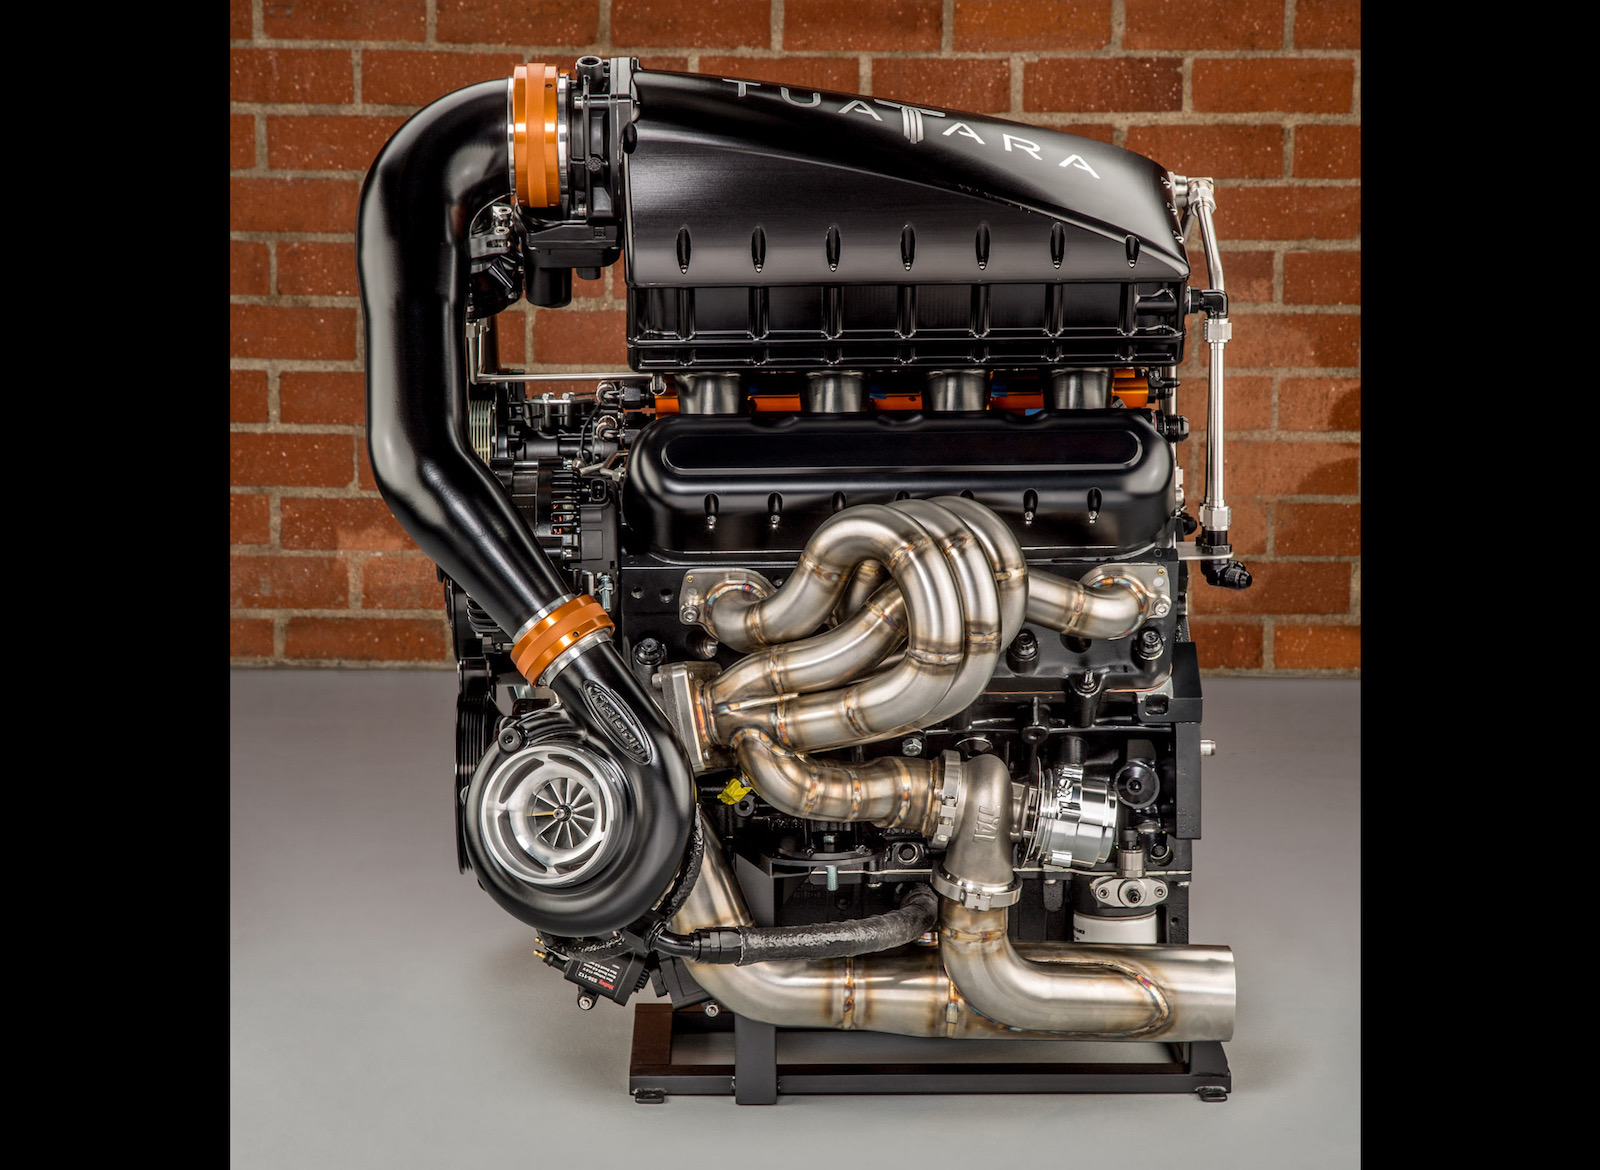 SSC Tuatara teasers show extreme twin-turbo V8 engine